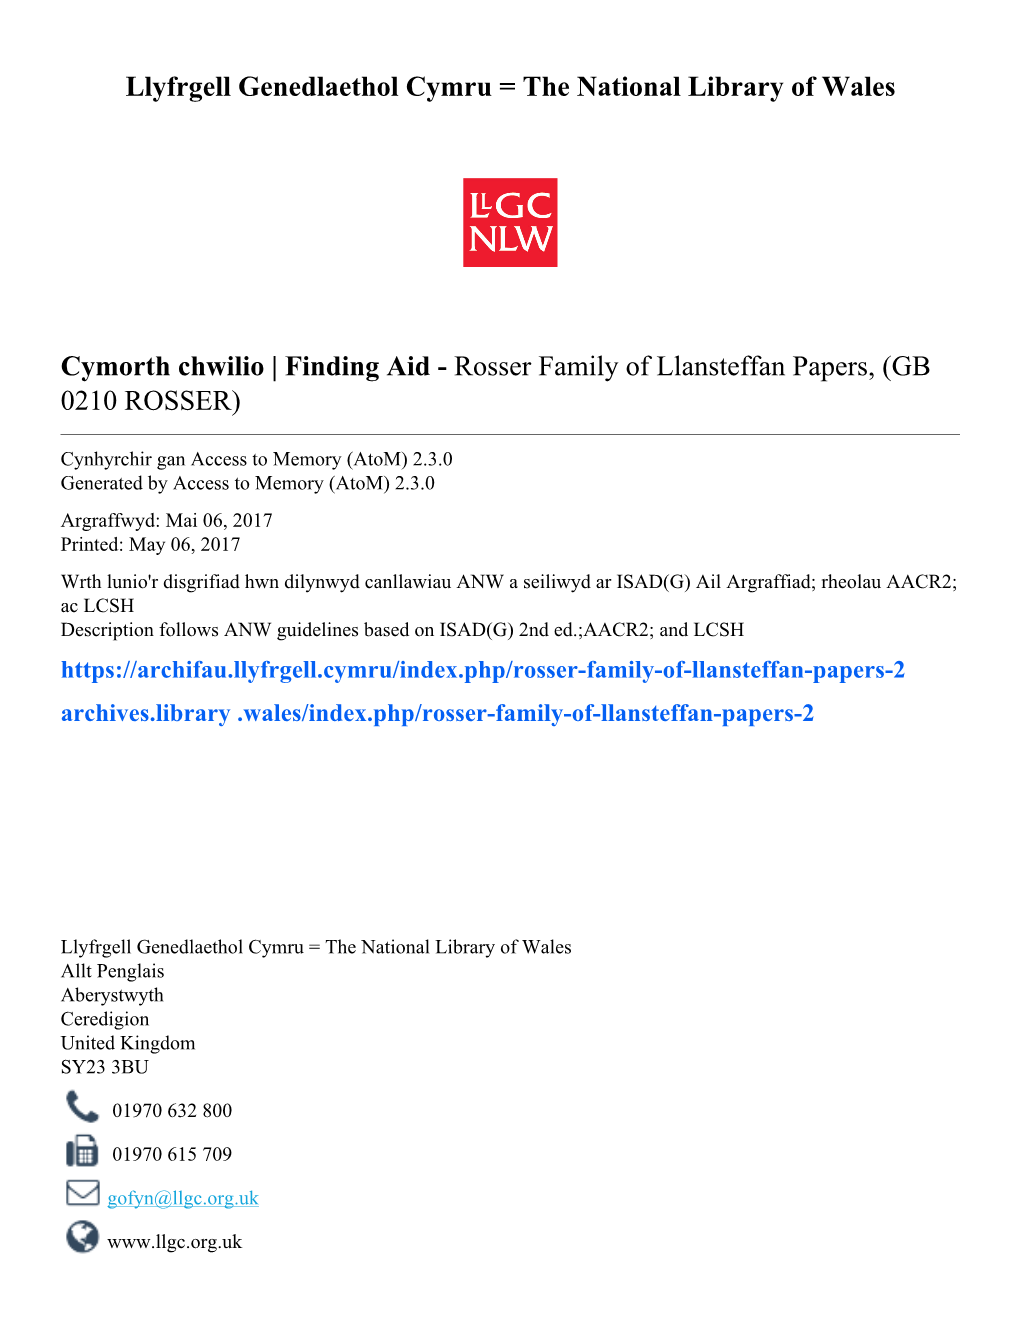 Rosser Family of Llansteffan Papers, (GB 0210 ROSSER)